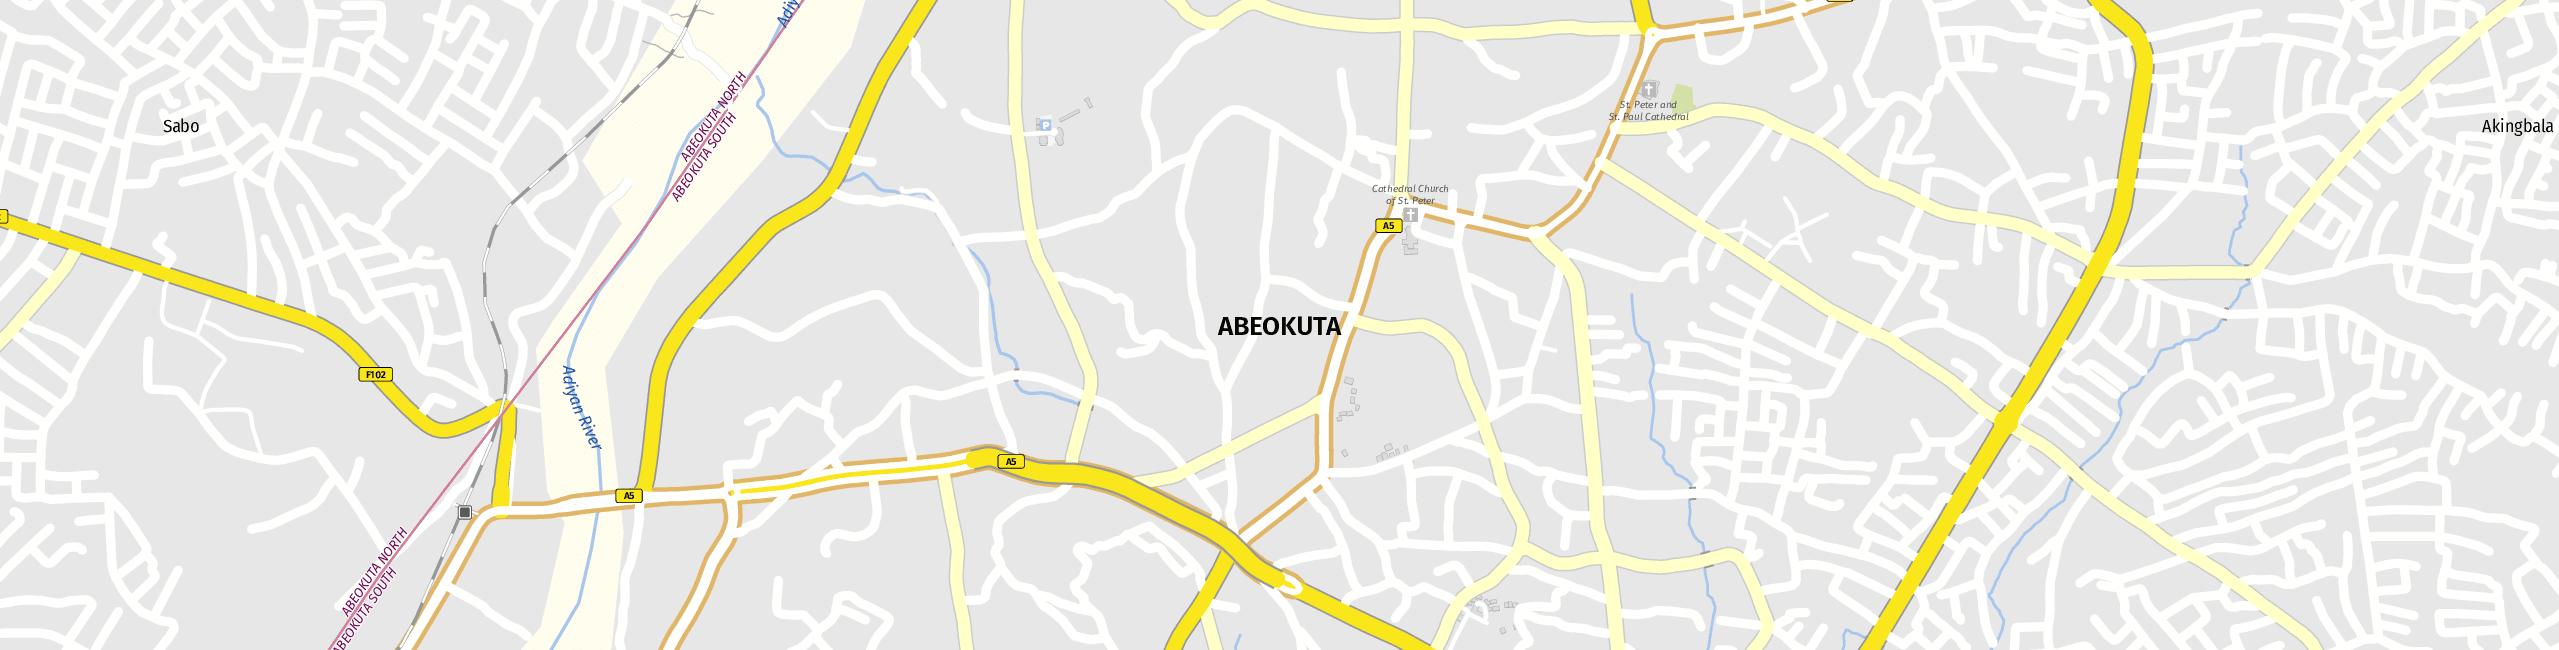 Stadtplan Abeokuta zum Downloaden.